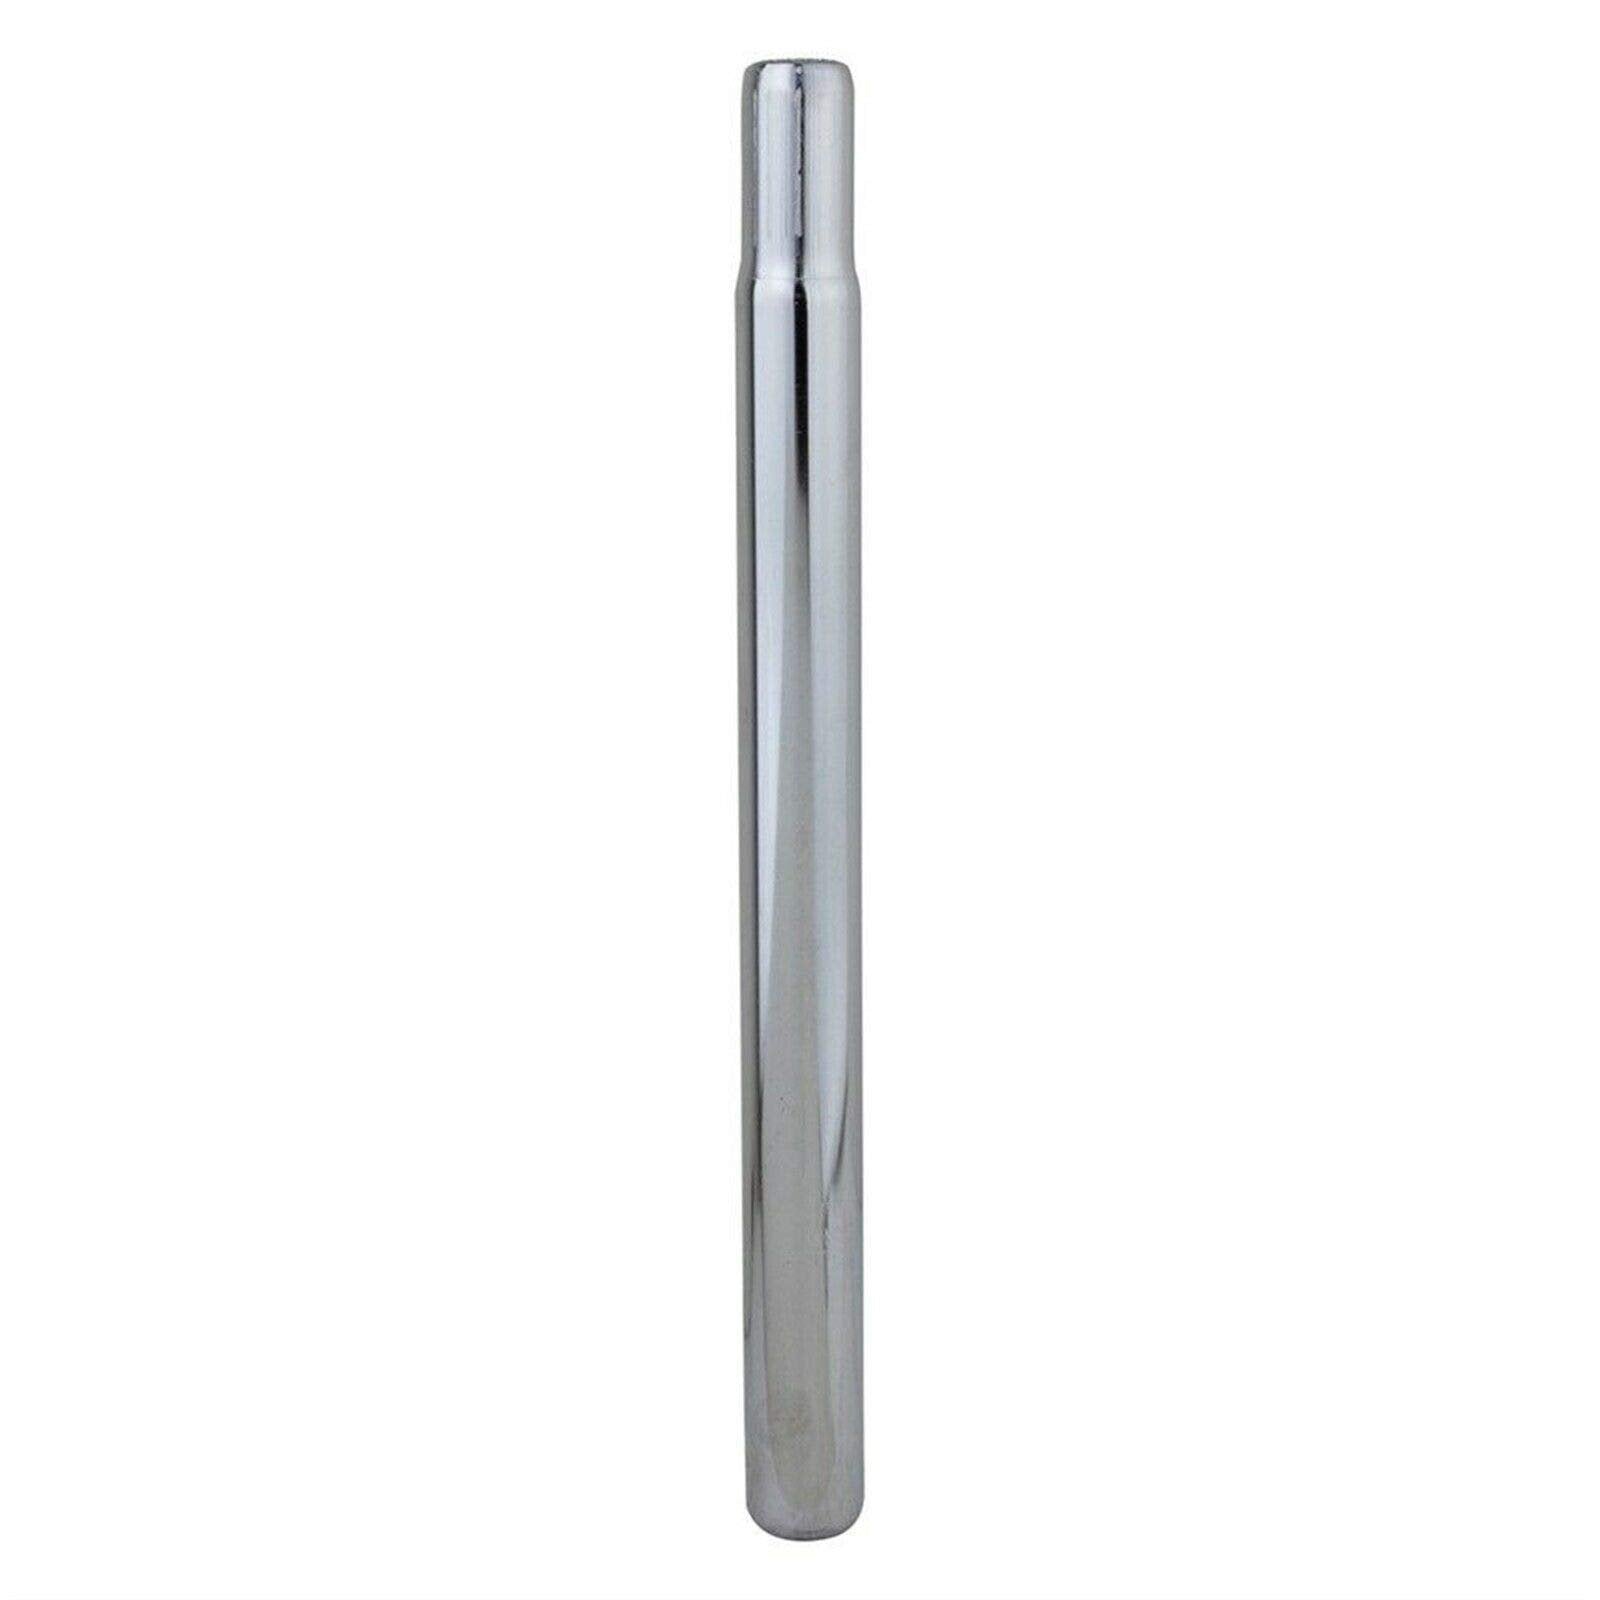 Sunlite Steel Pillar Seatpost, 16 x 7/8", Chrome Plated